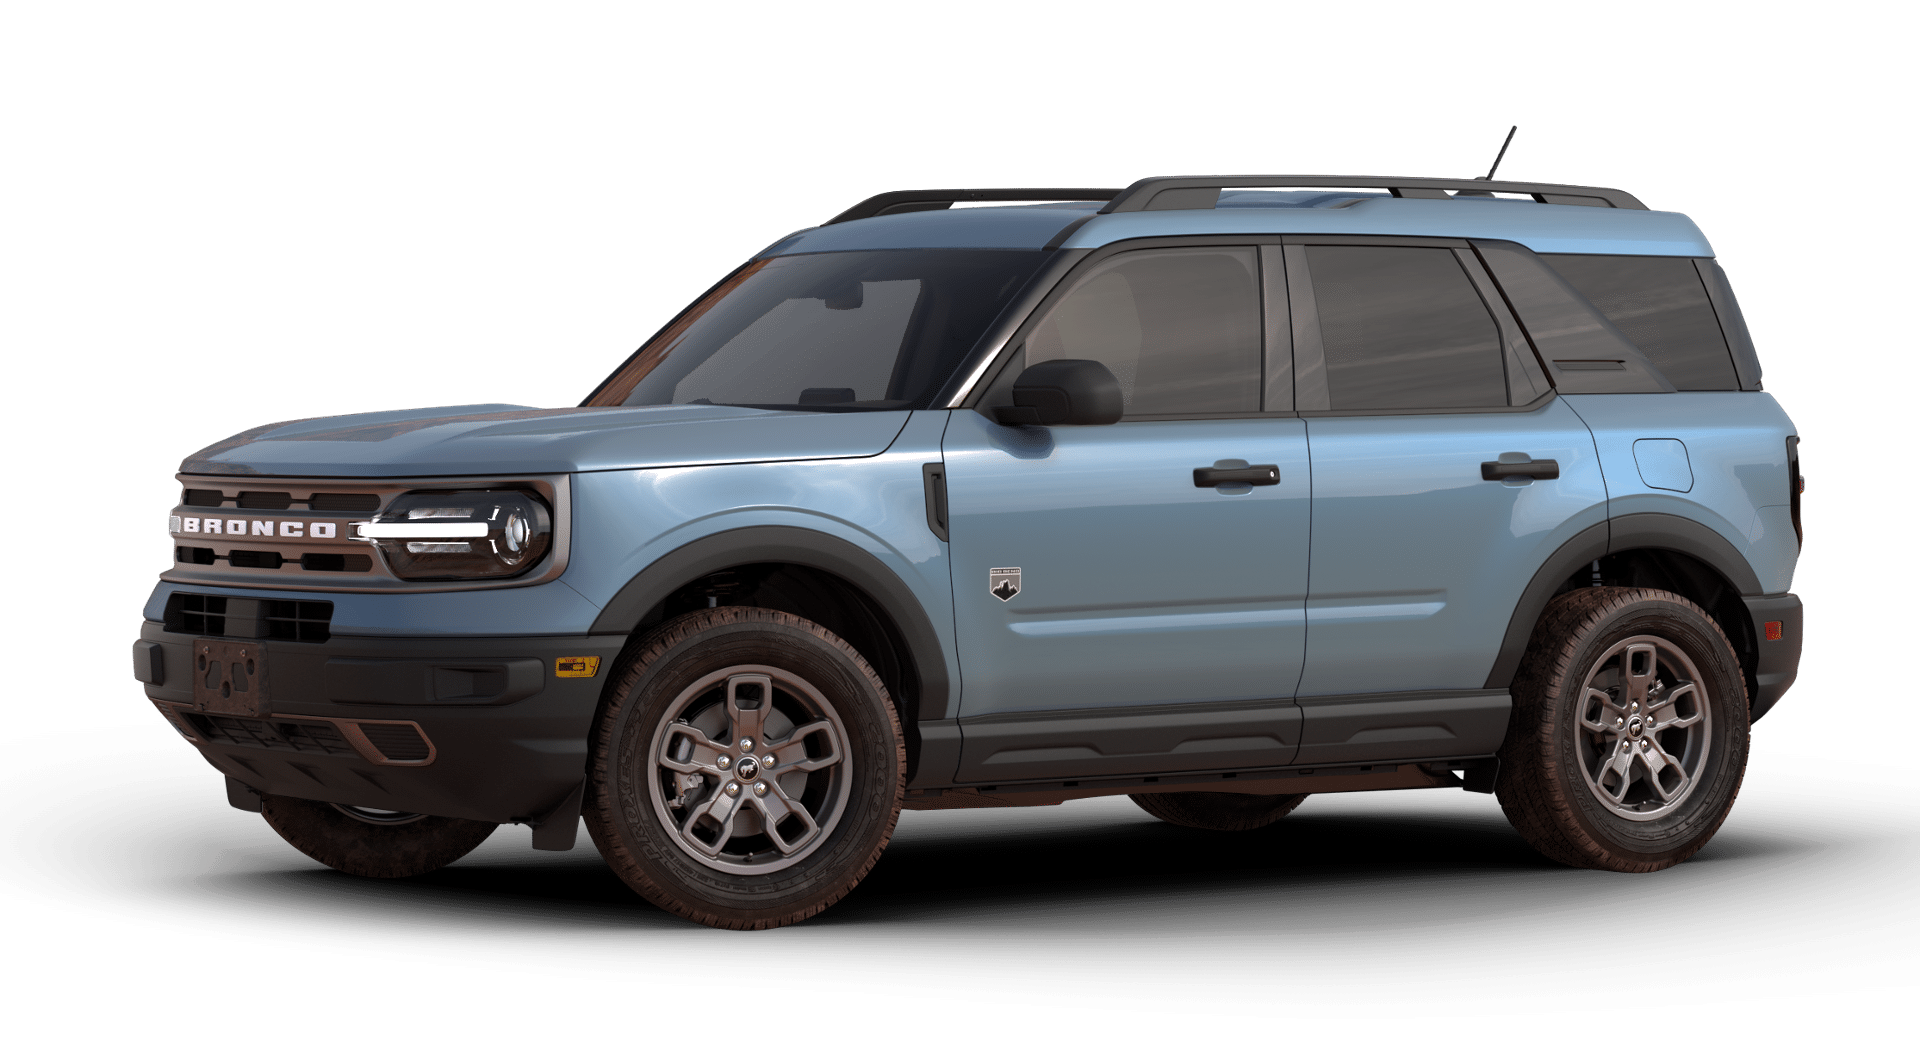 2024 Ford Bronco Sport BIG Bend